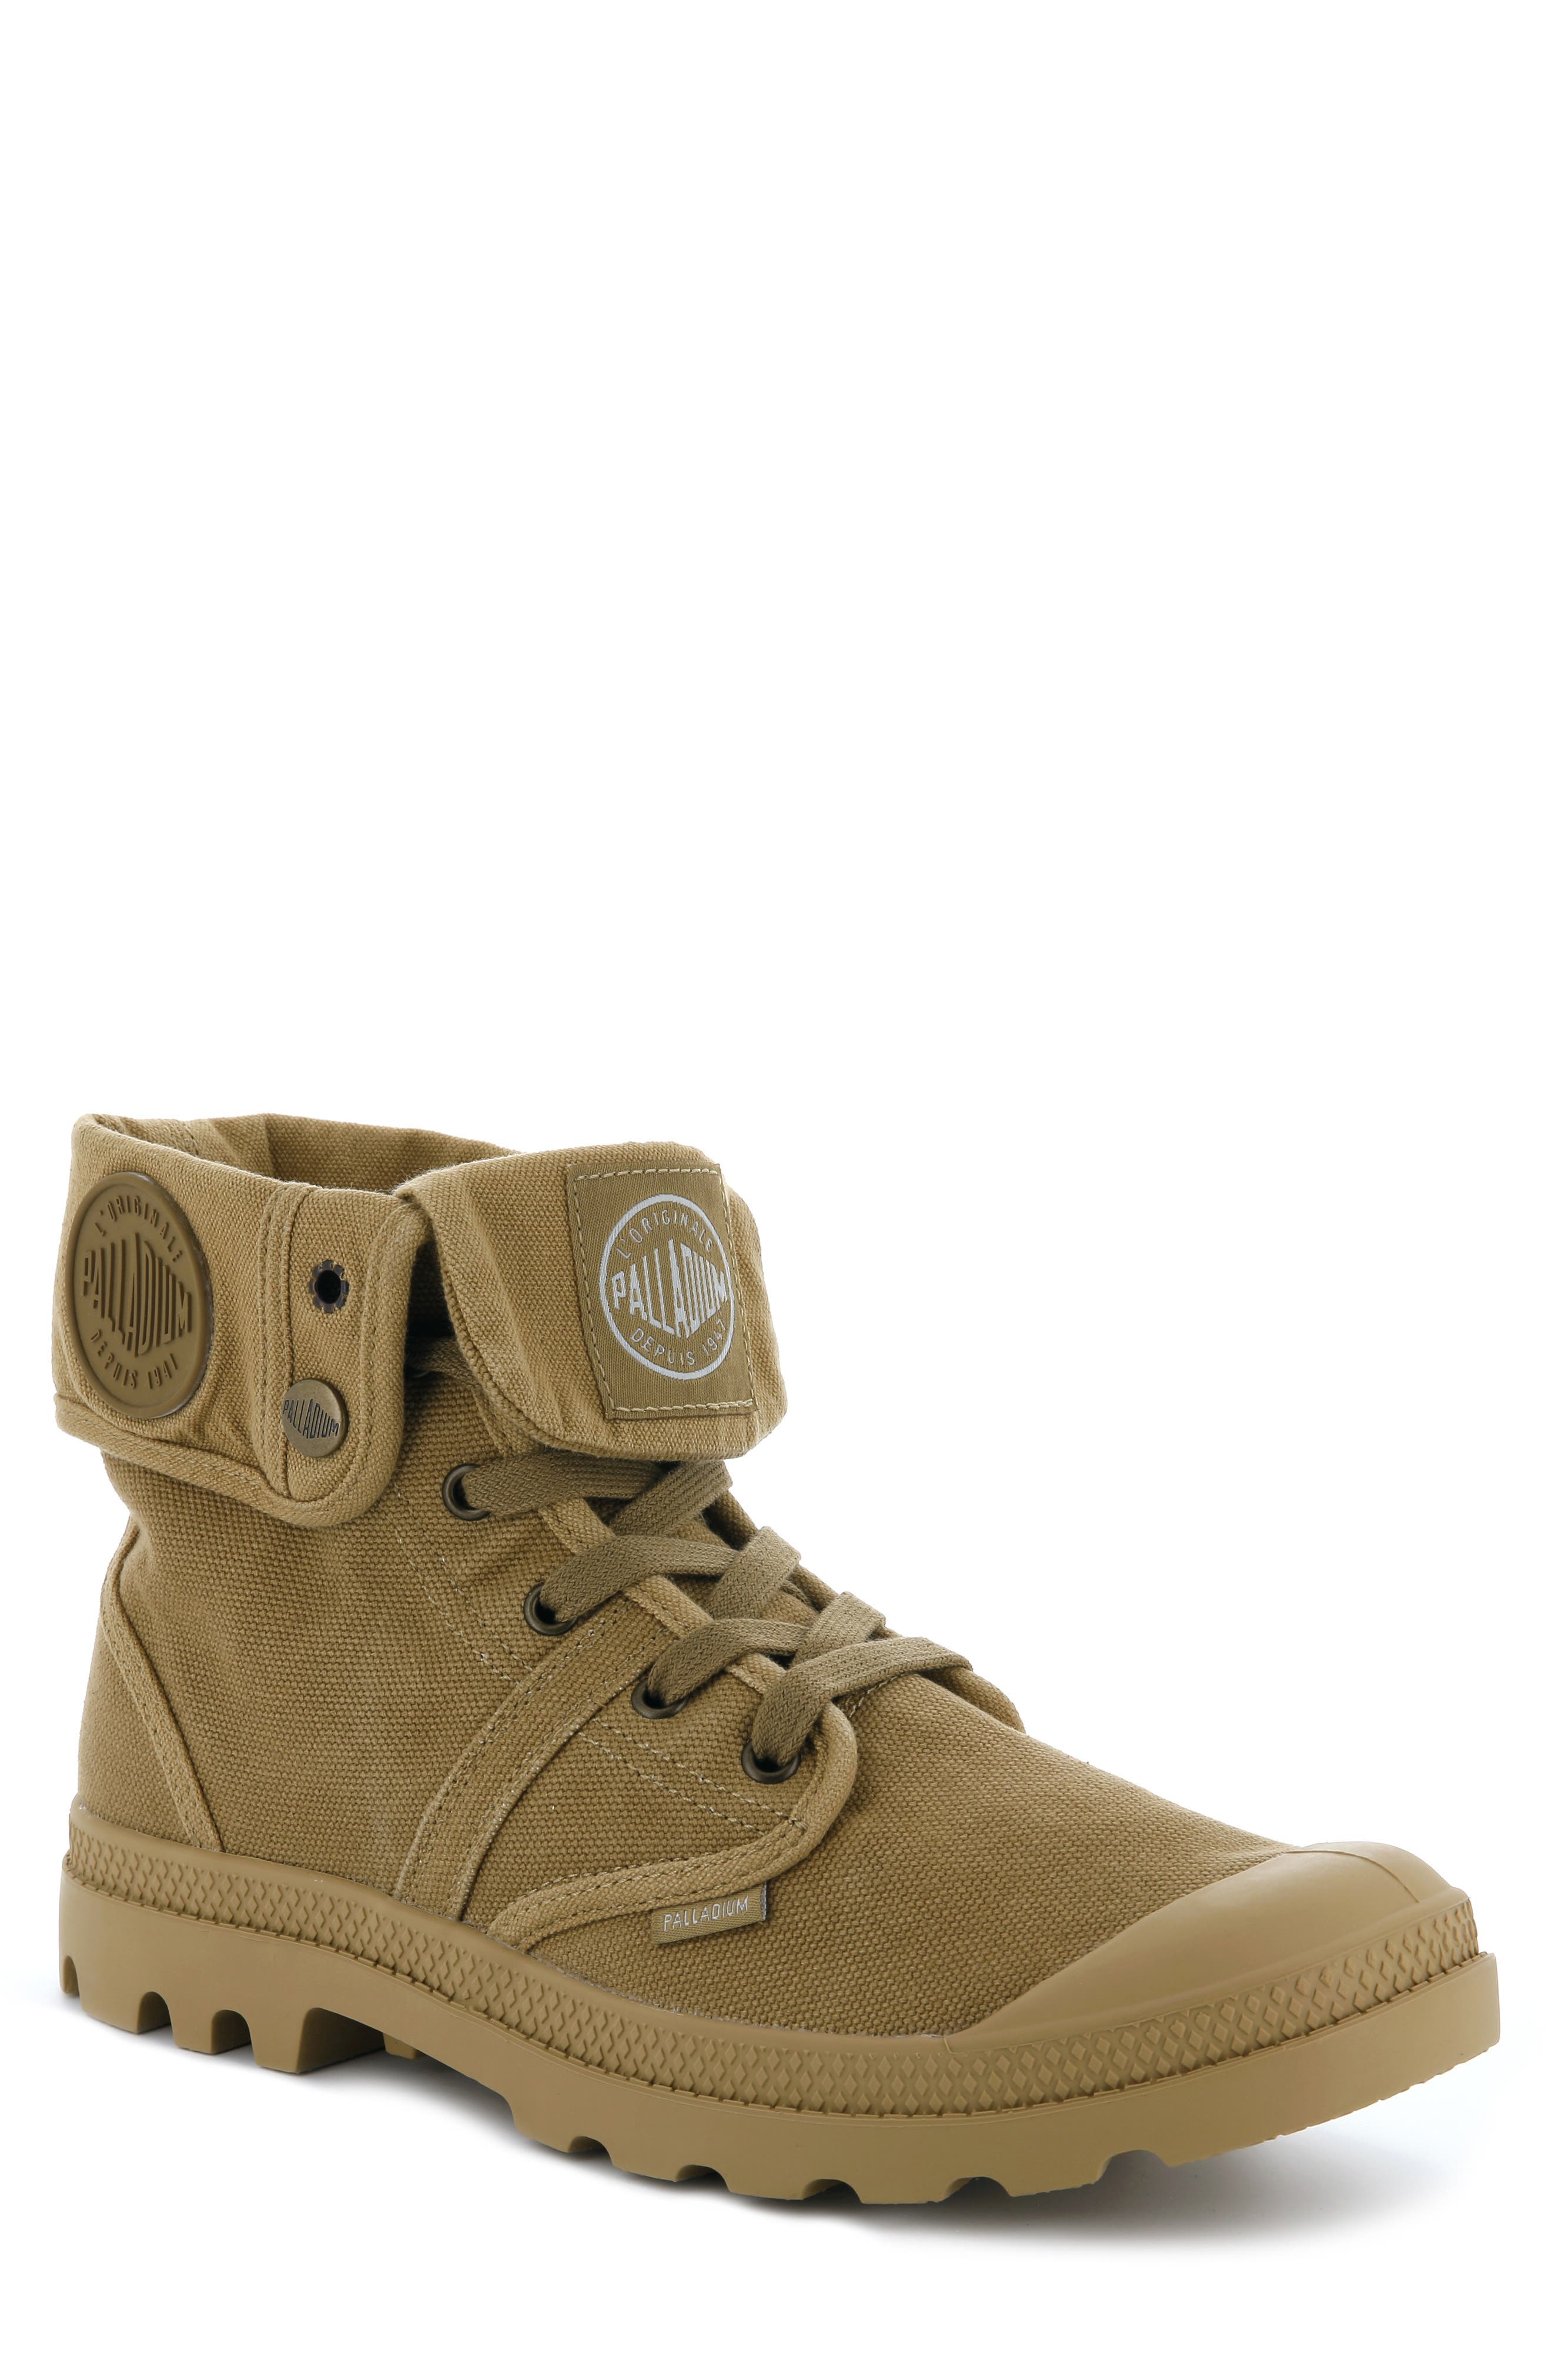 Palladium Pallabrouse Baggy Wax Boots Schuhe High Top Sneaker Stiefel 75534-046